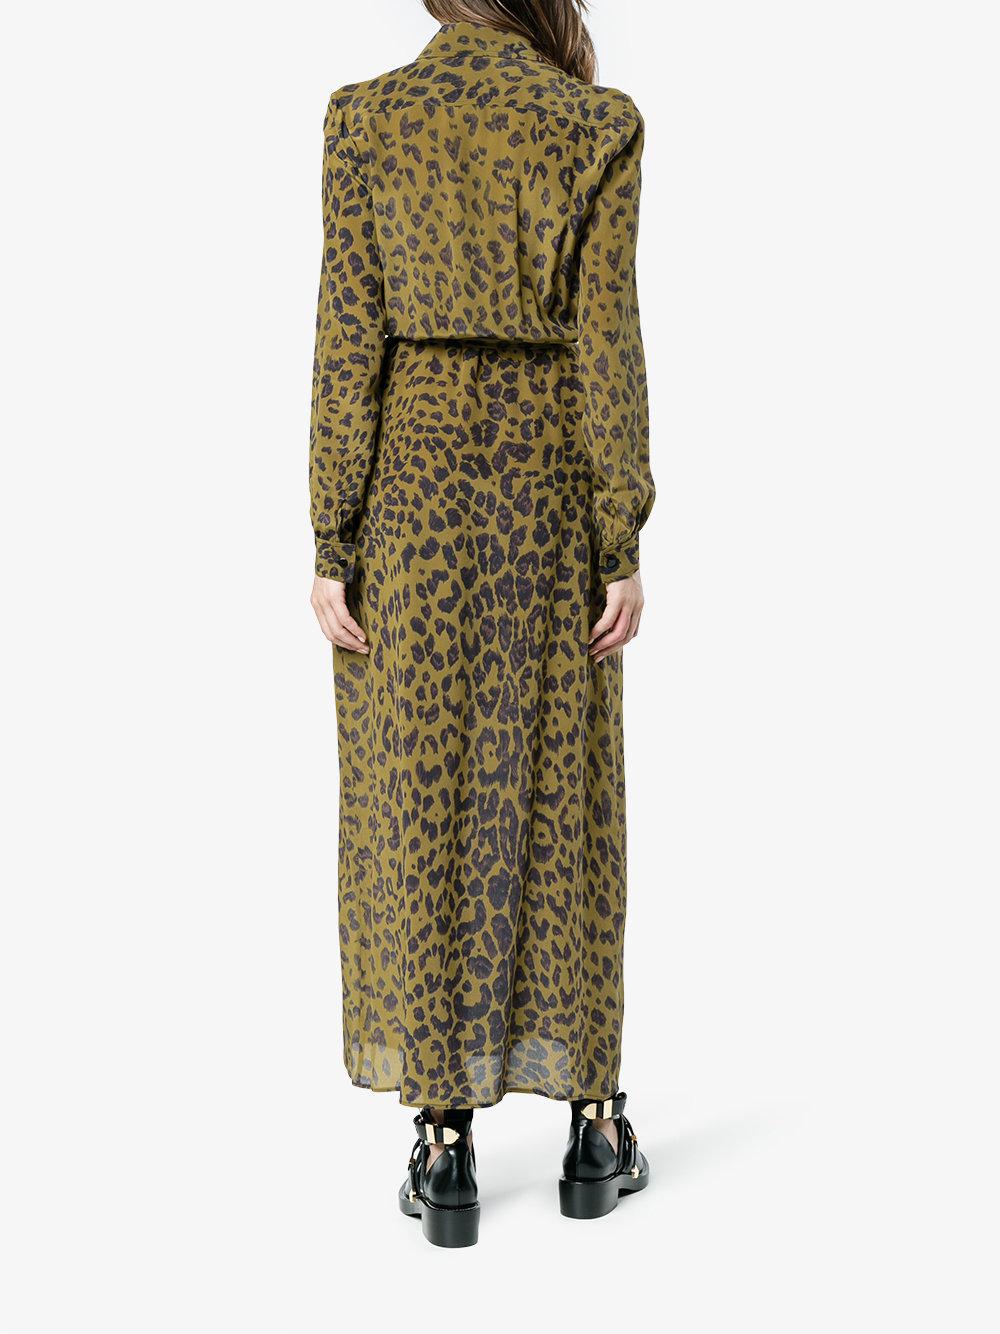 bella freud leopard dress